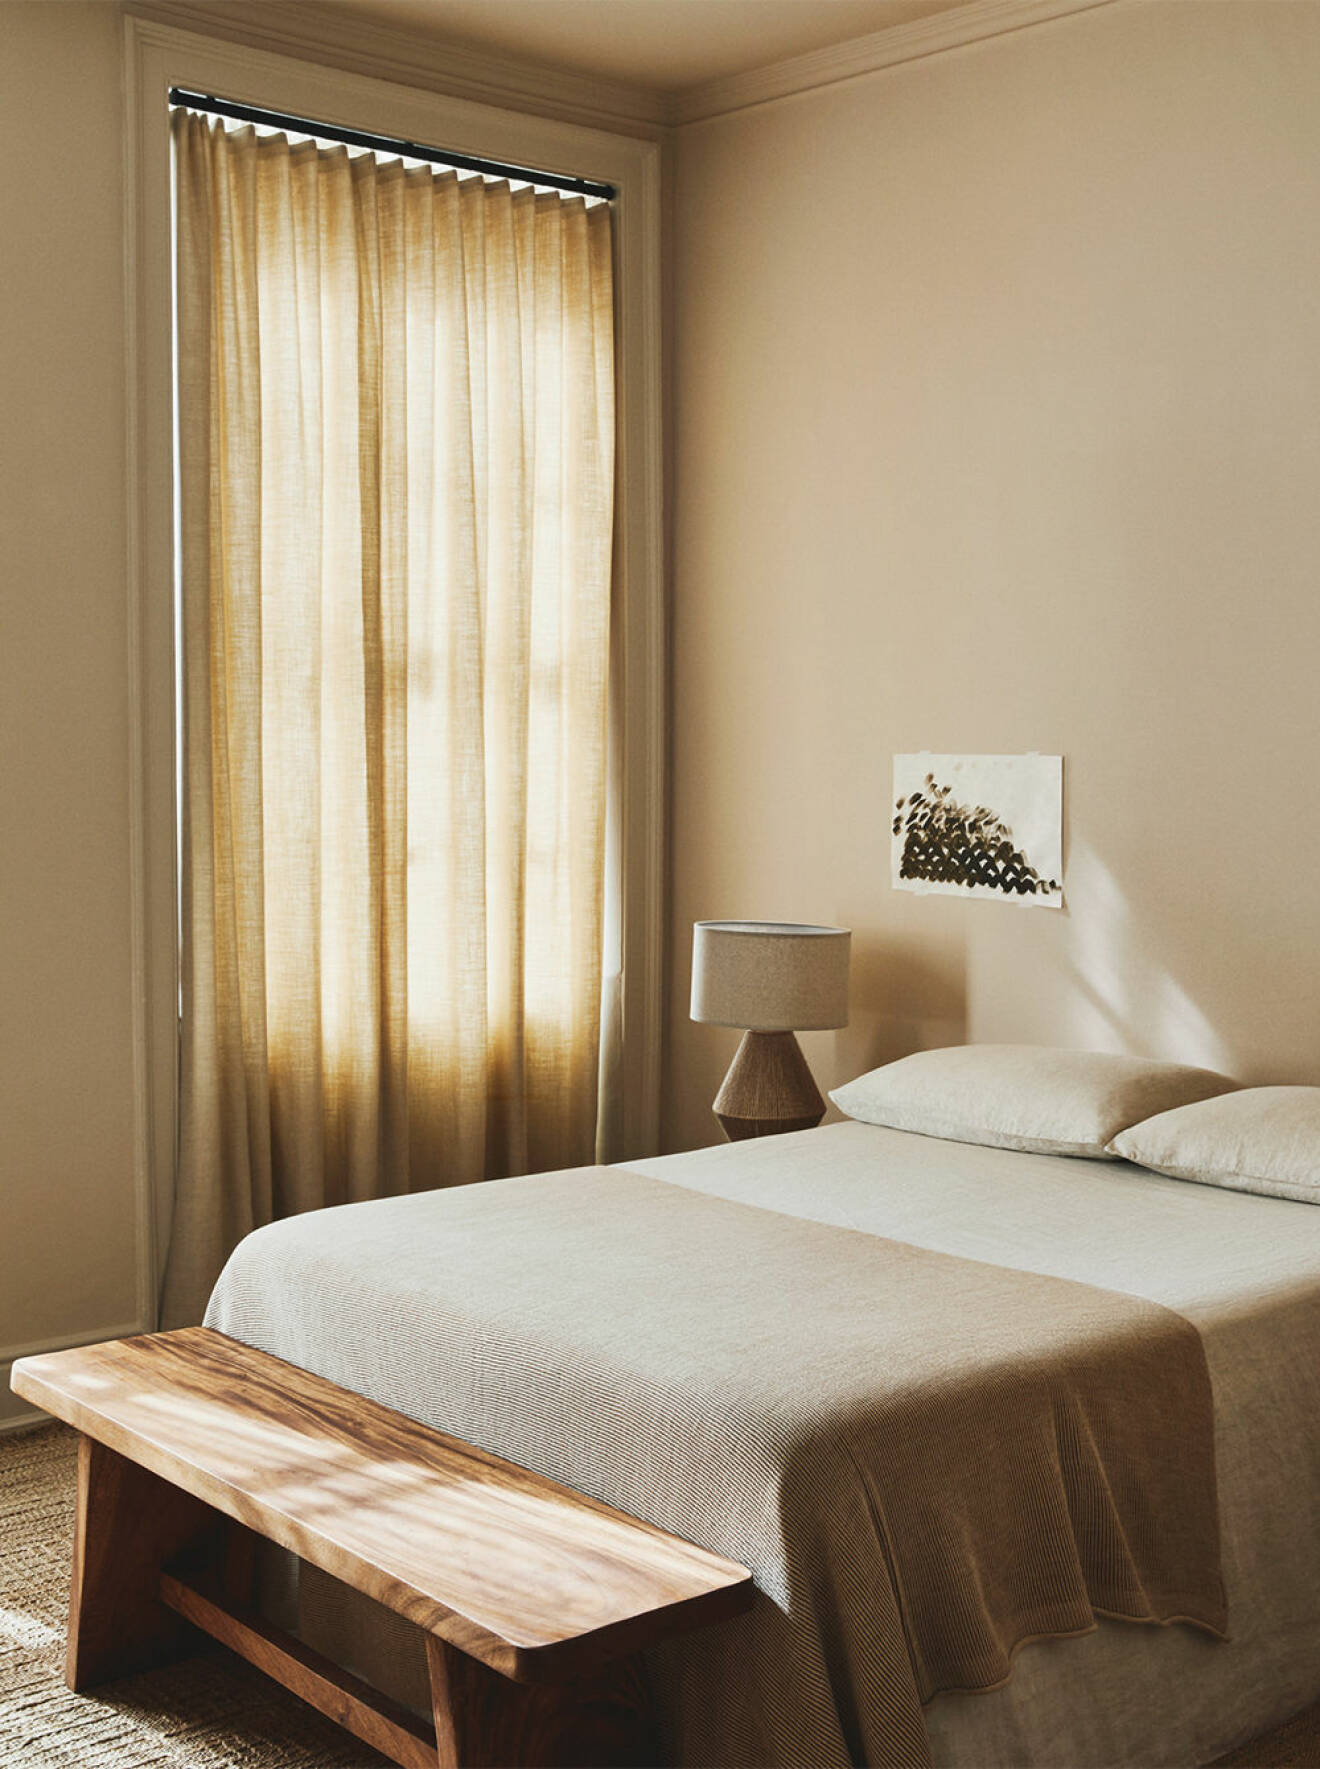 Sovrum i beige och naturmaterial hos Zara Home 2020